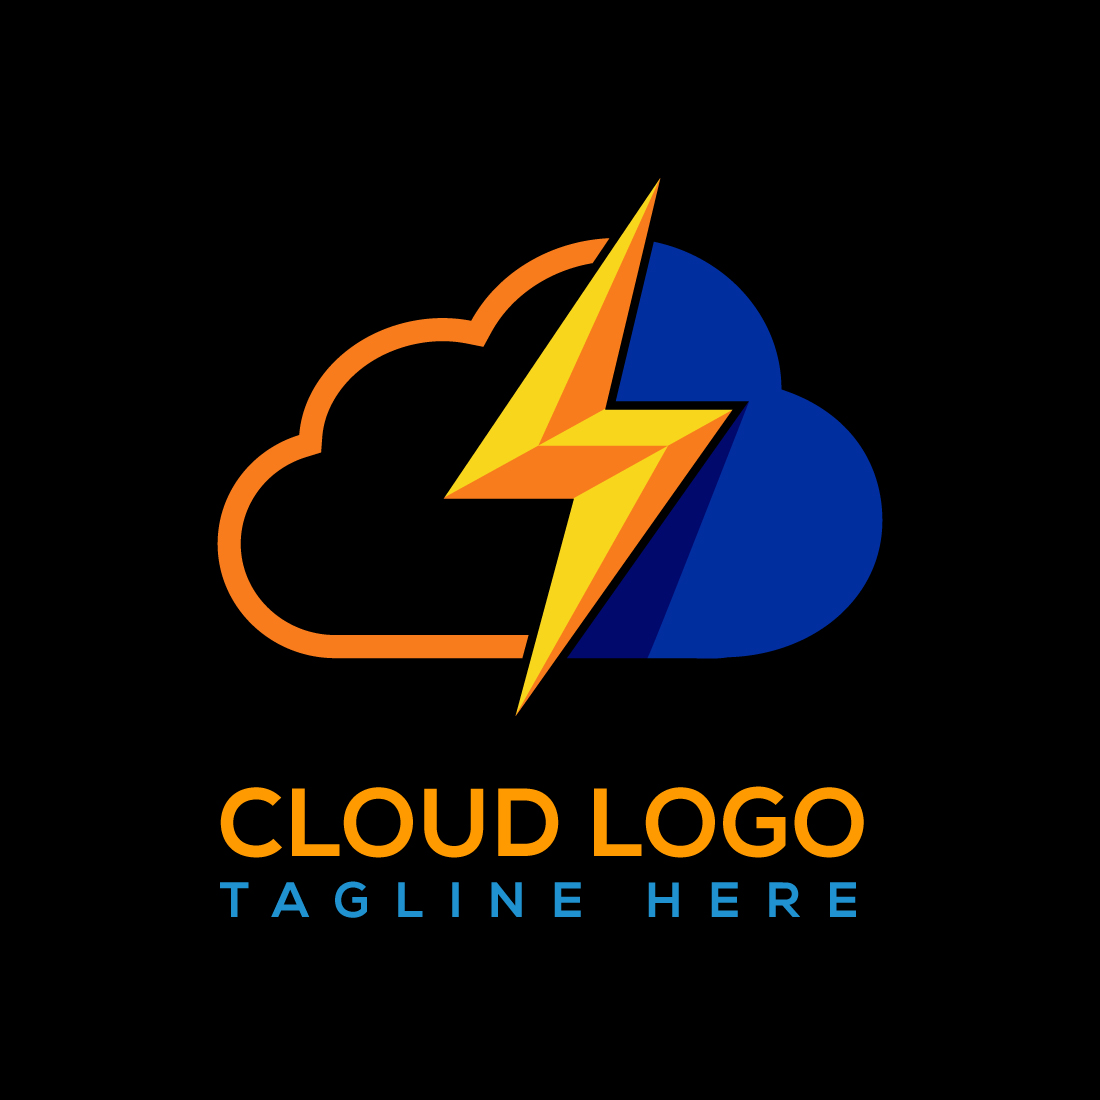 Modern Technology Logo Design cover image.